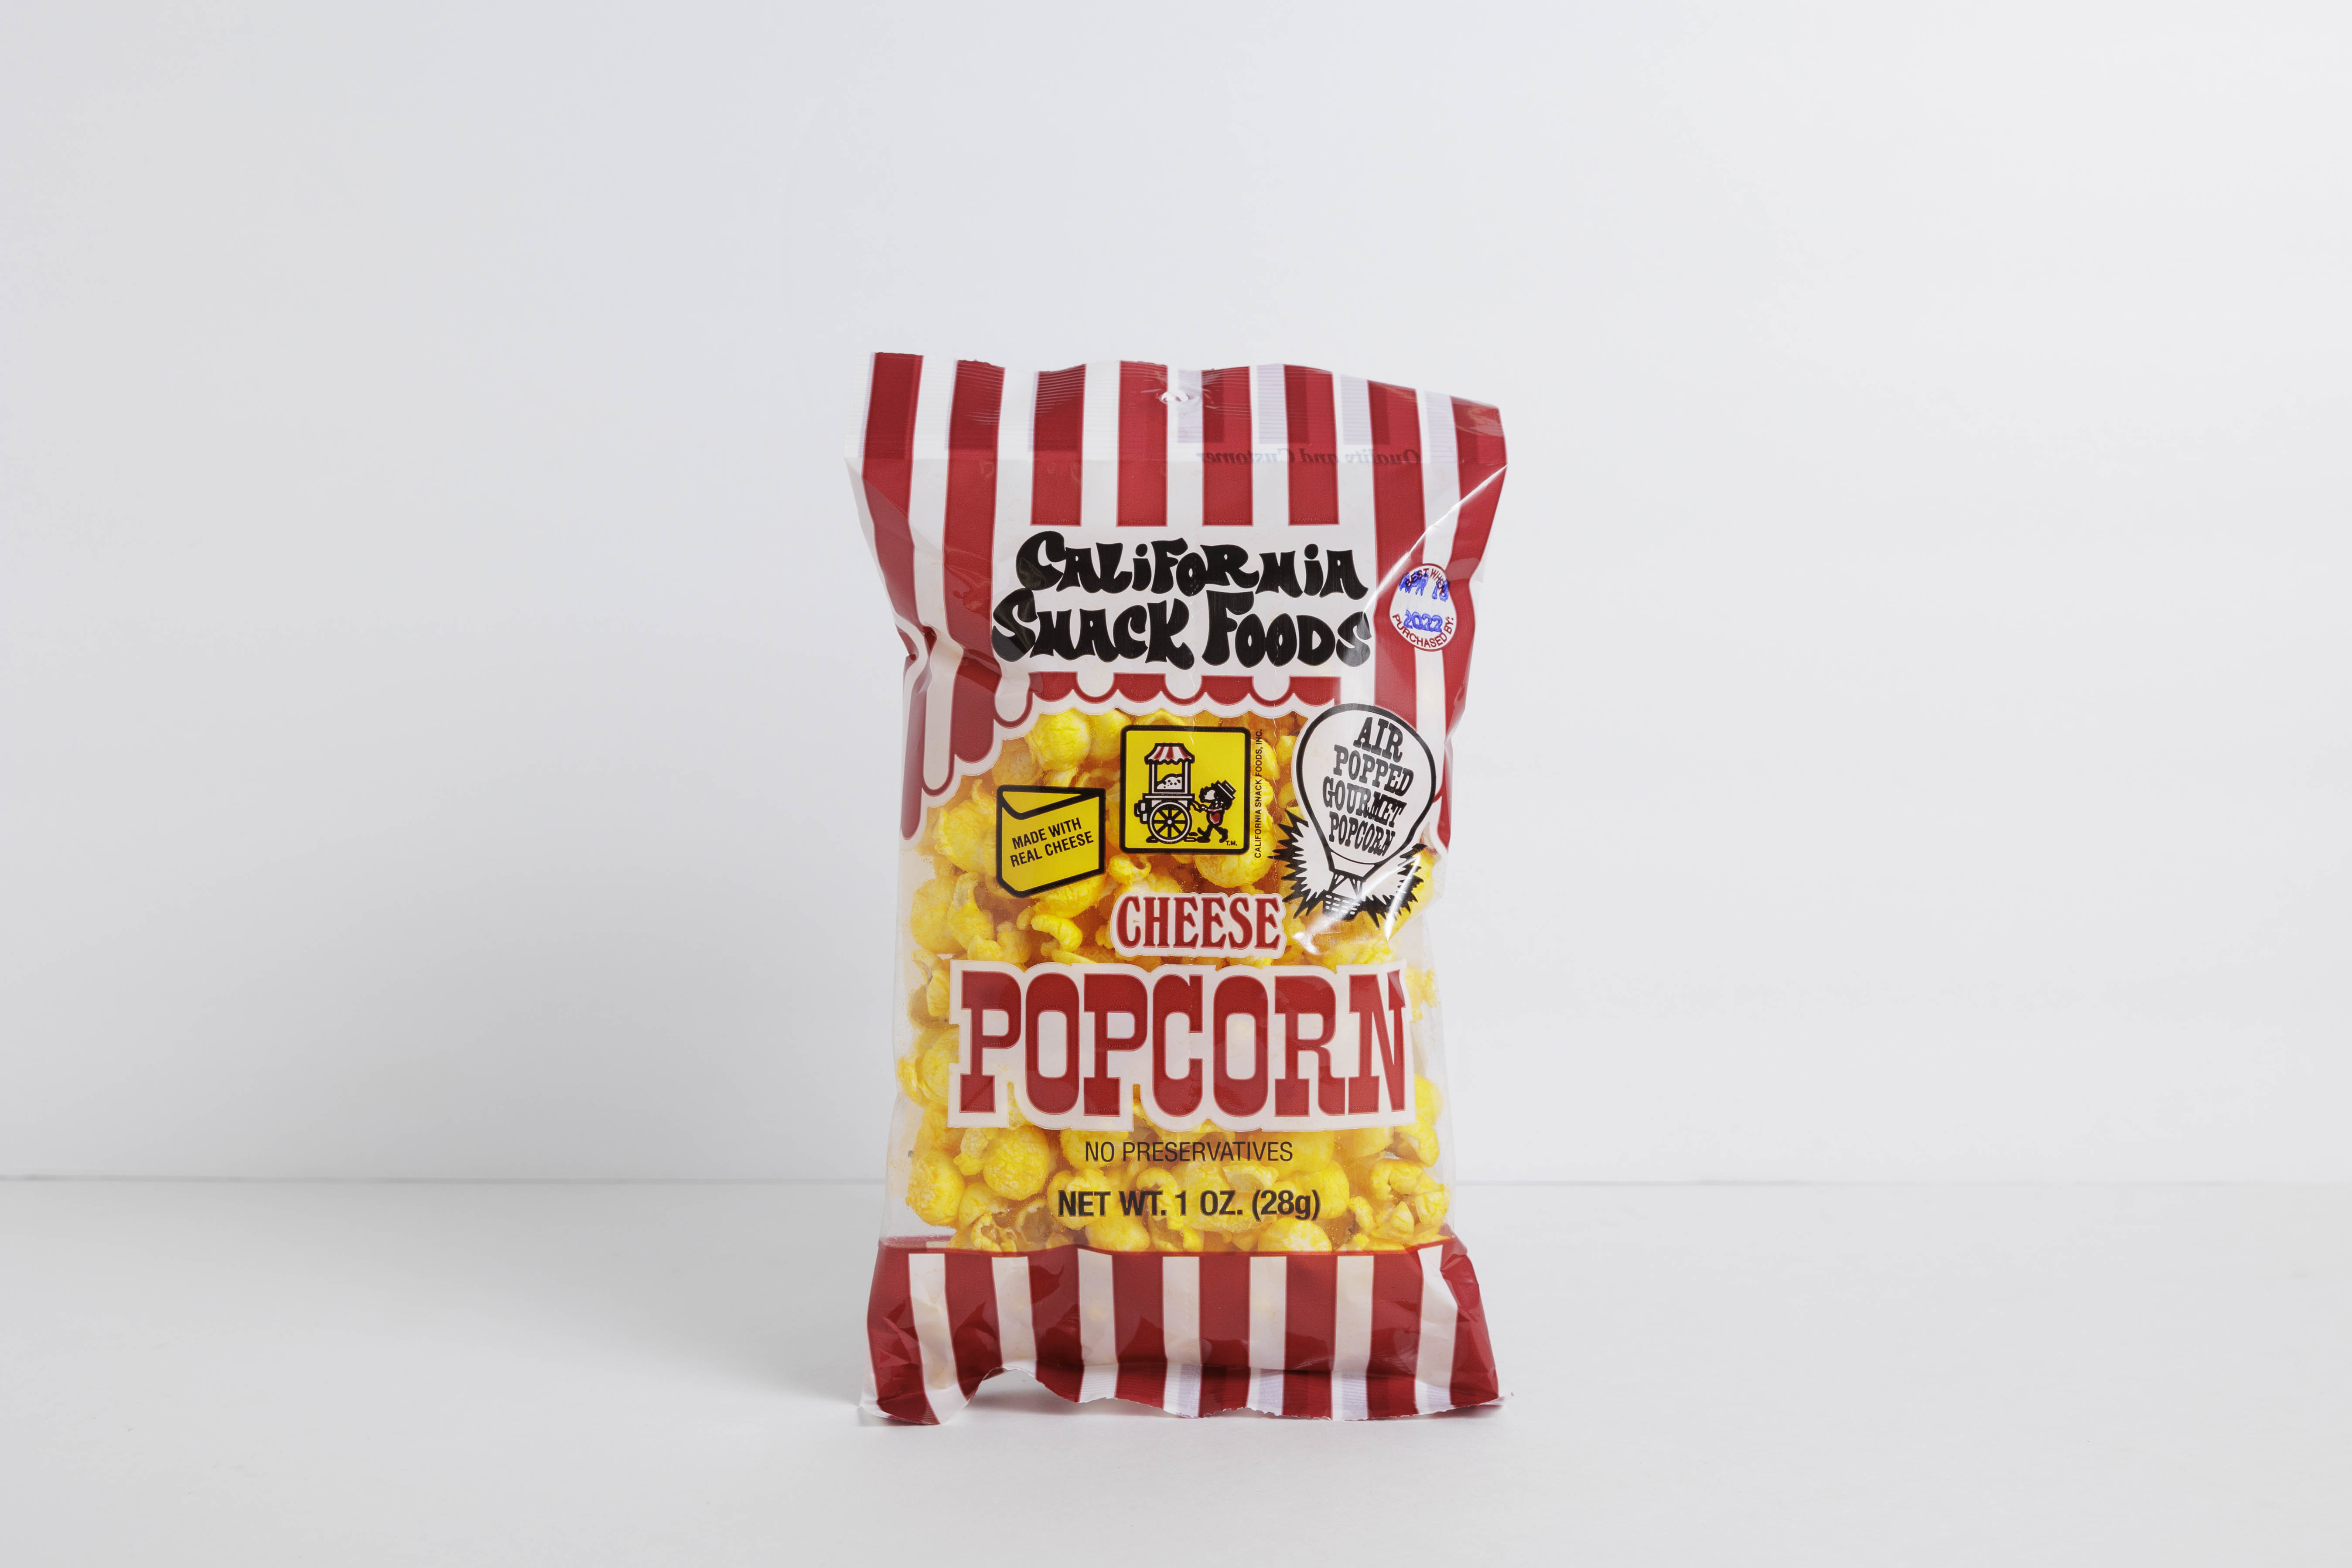 Popcornopolis bestselling Caramel Corn  Cheddar Cheese gourmet popcorn  bags to debut at Sams Club  20191111  Snack Food  Wholesale Bakery